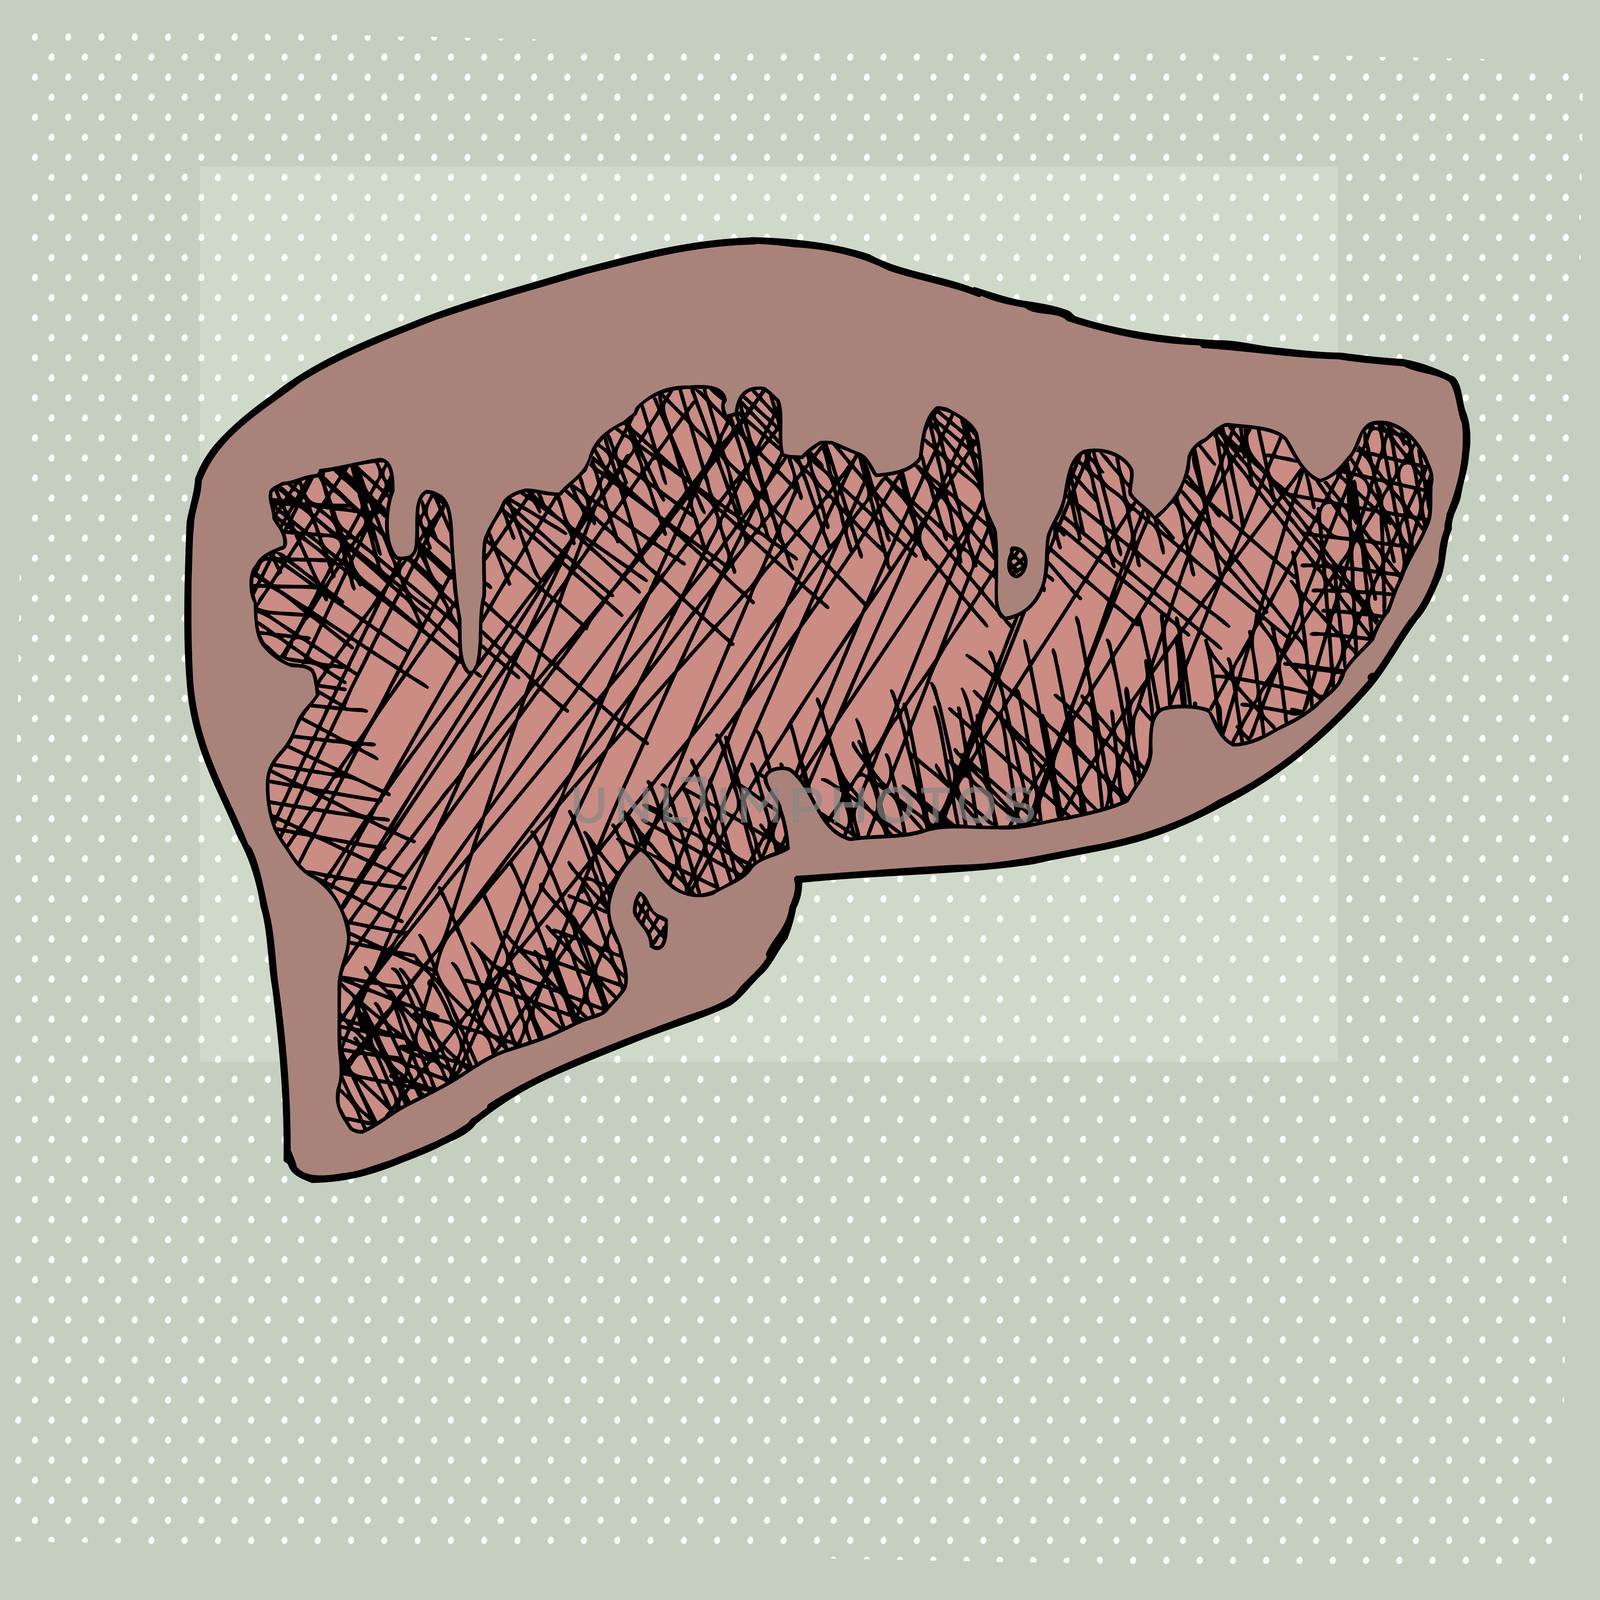 Cartoon cross section of diseased human liver organ